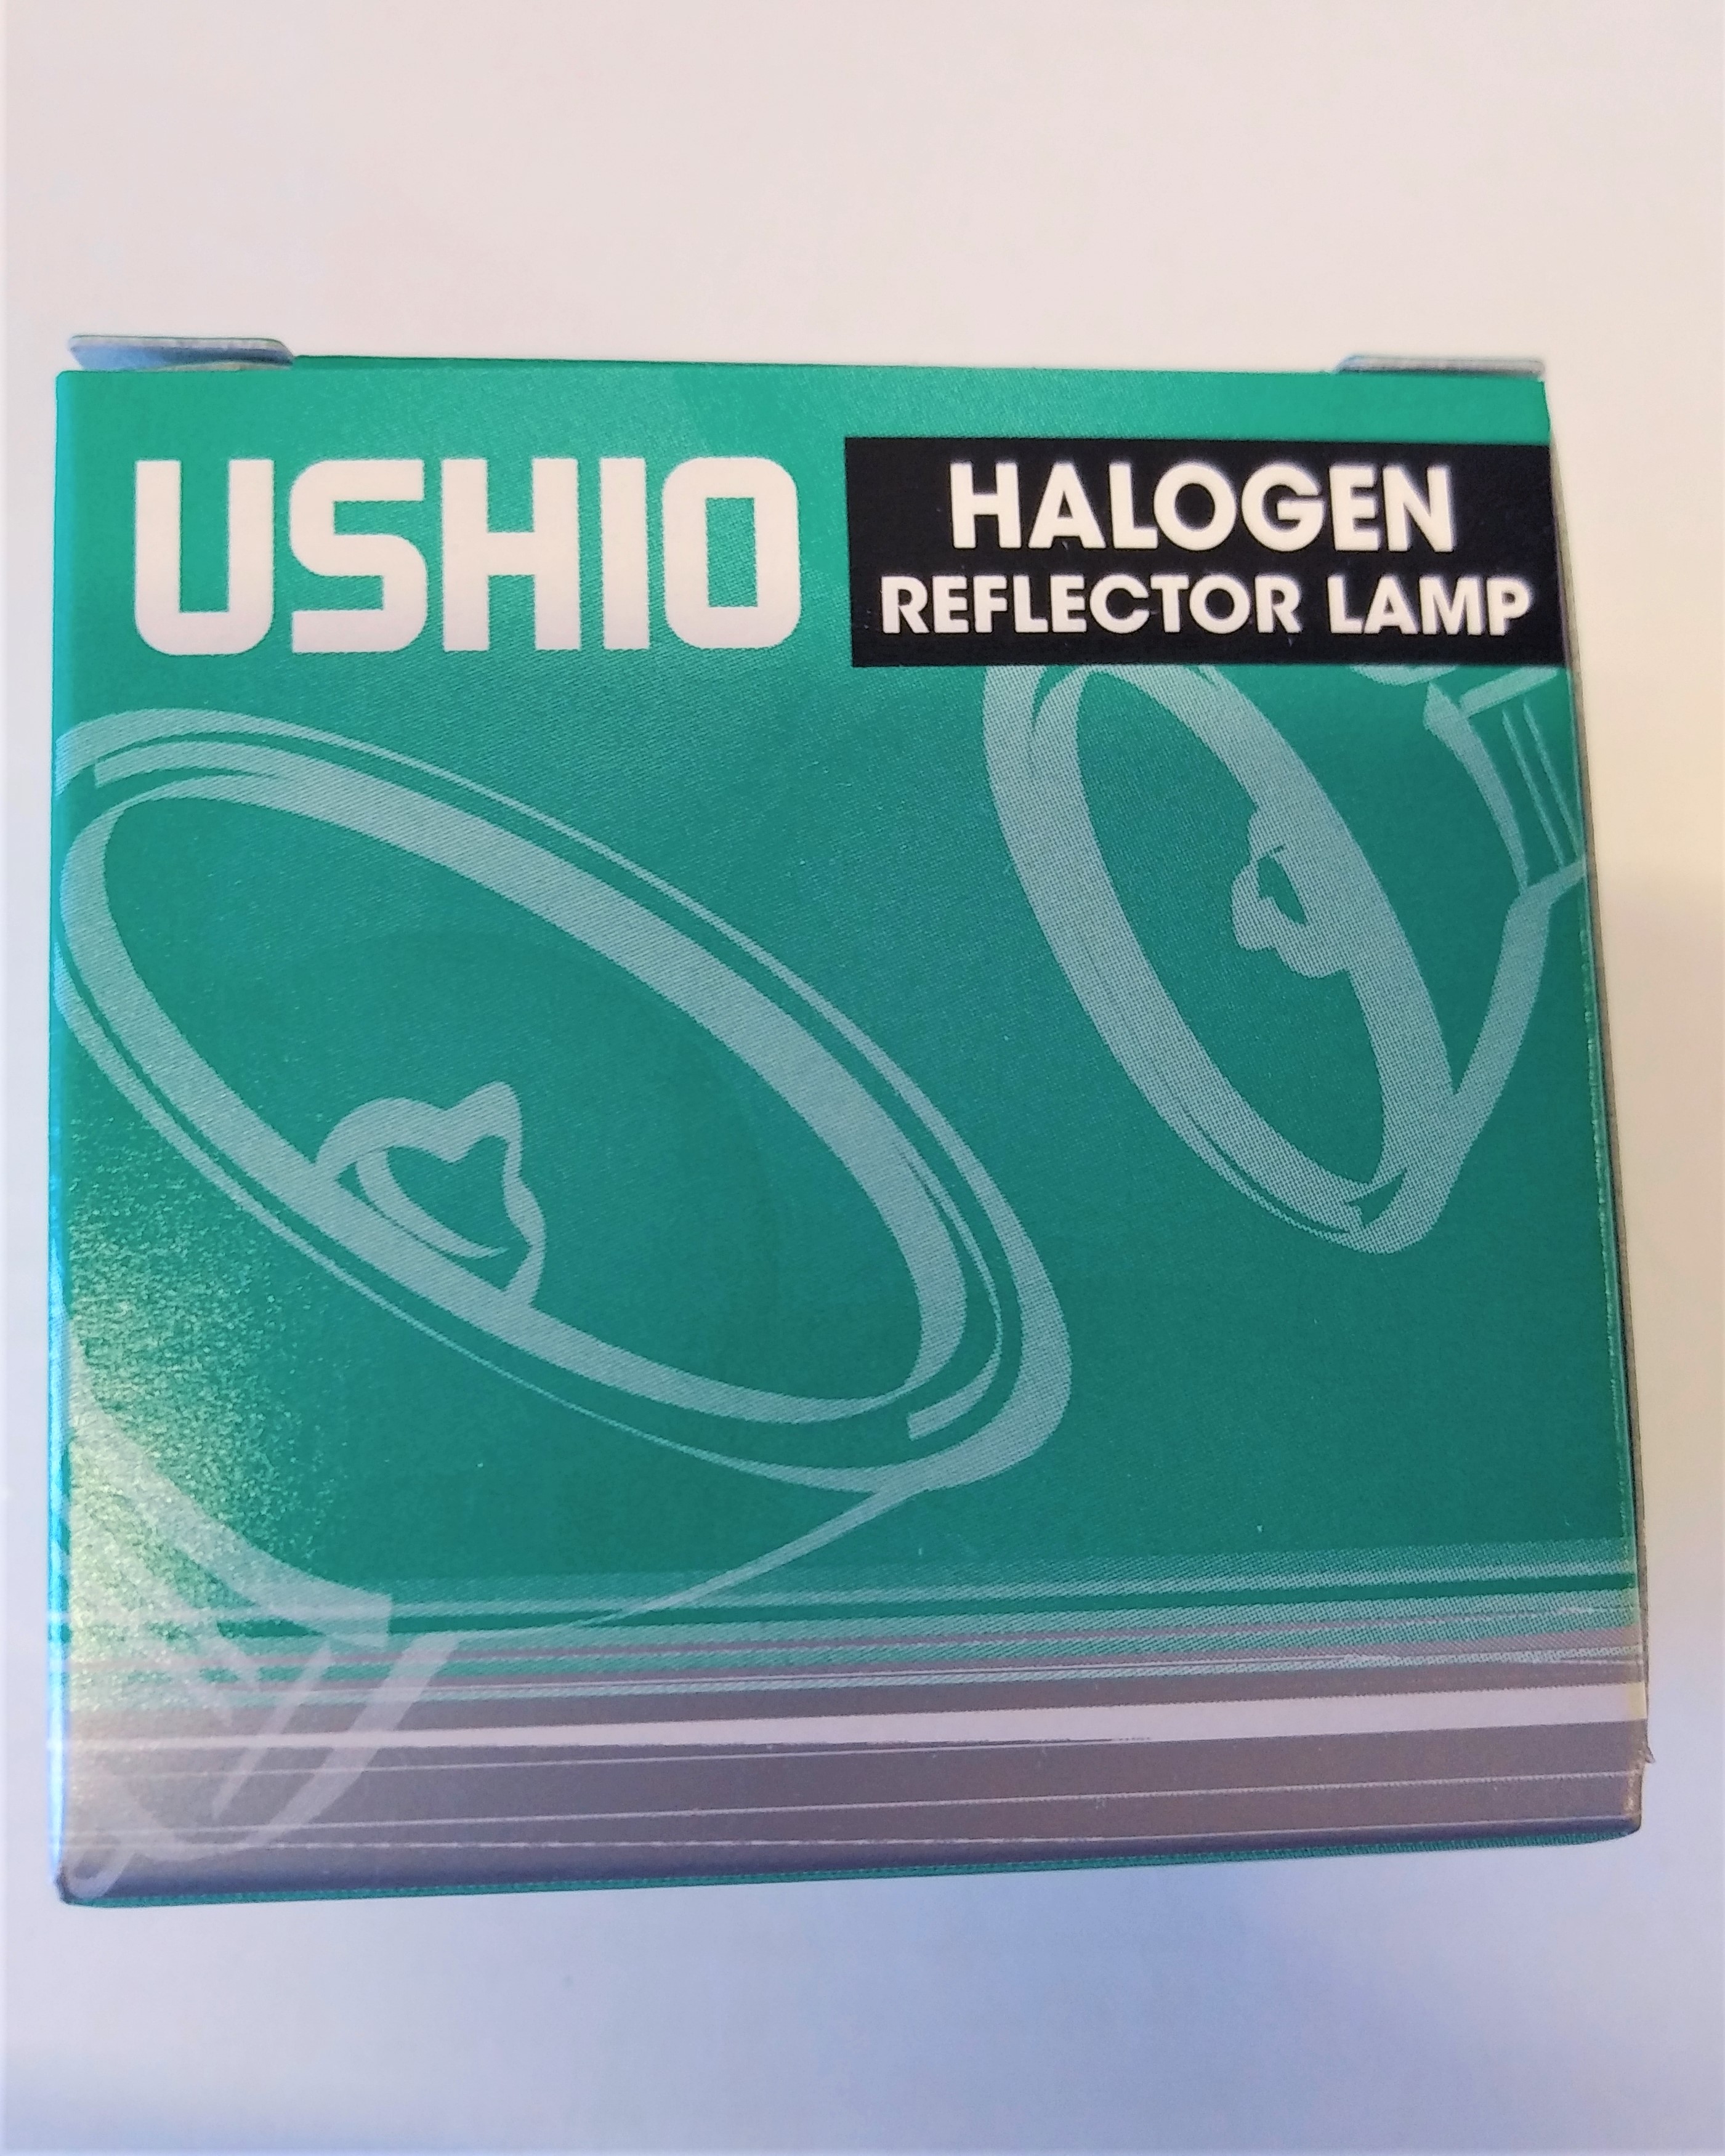 USHIO Halogen Reflector Lamp EKZ 10. 8V30W